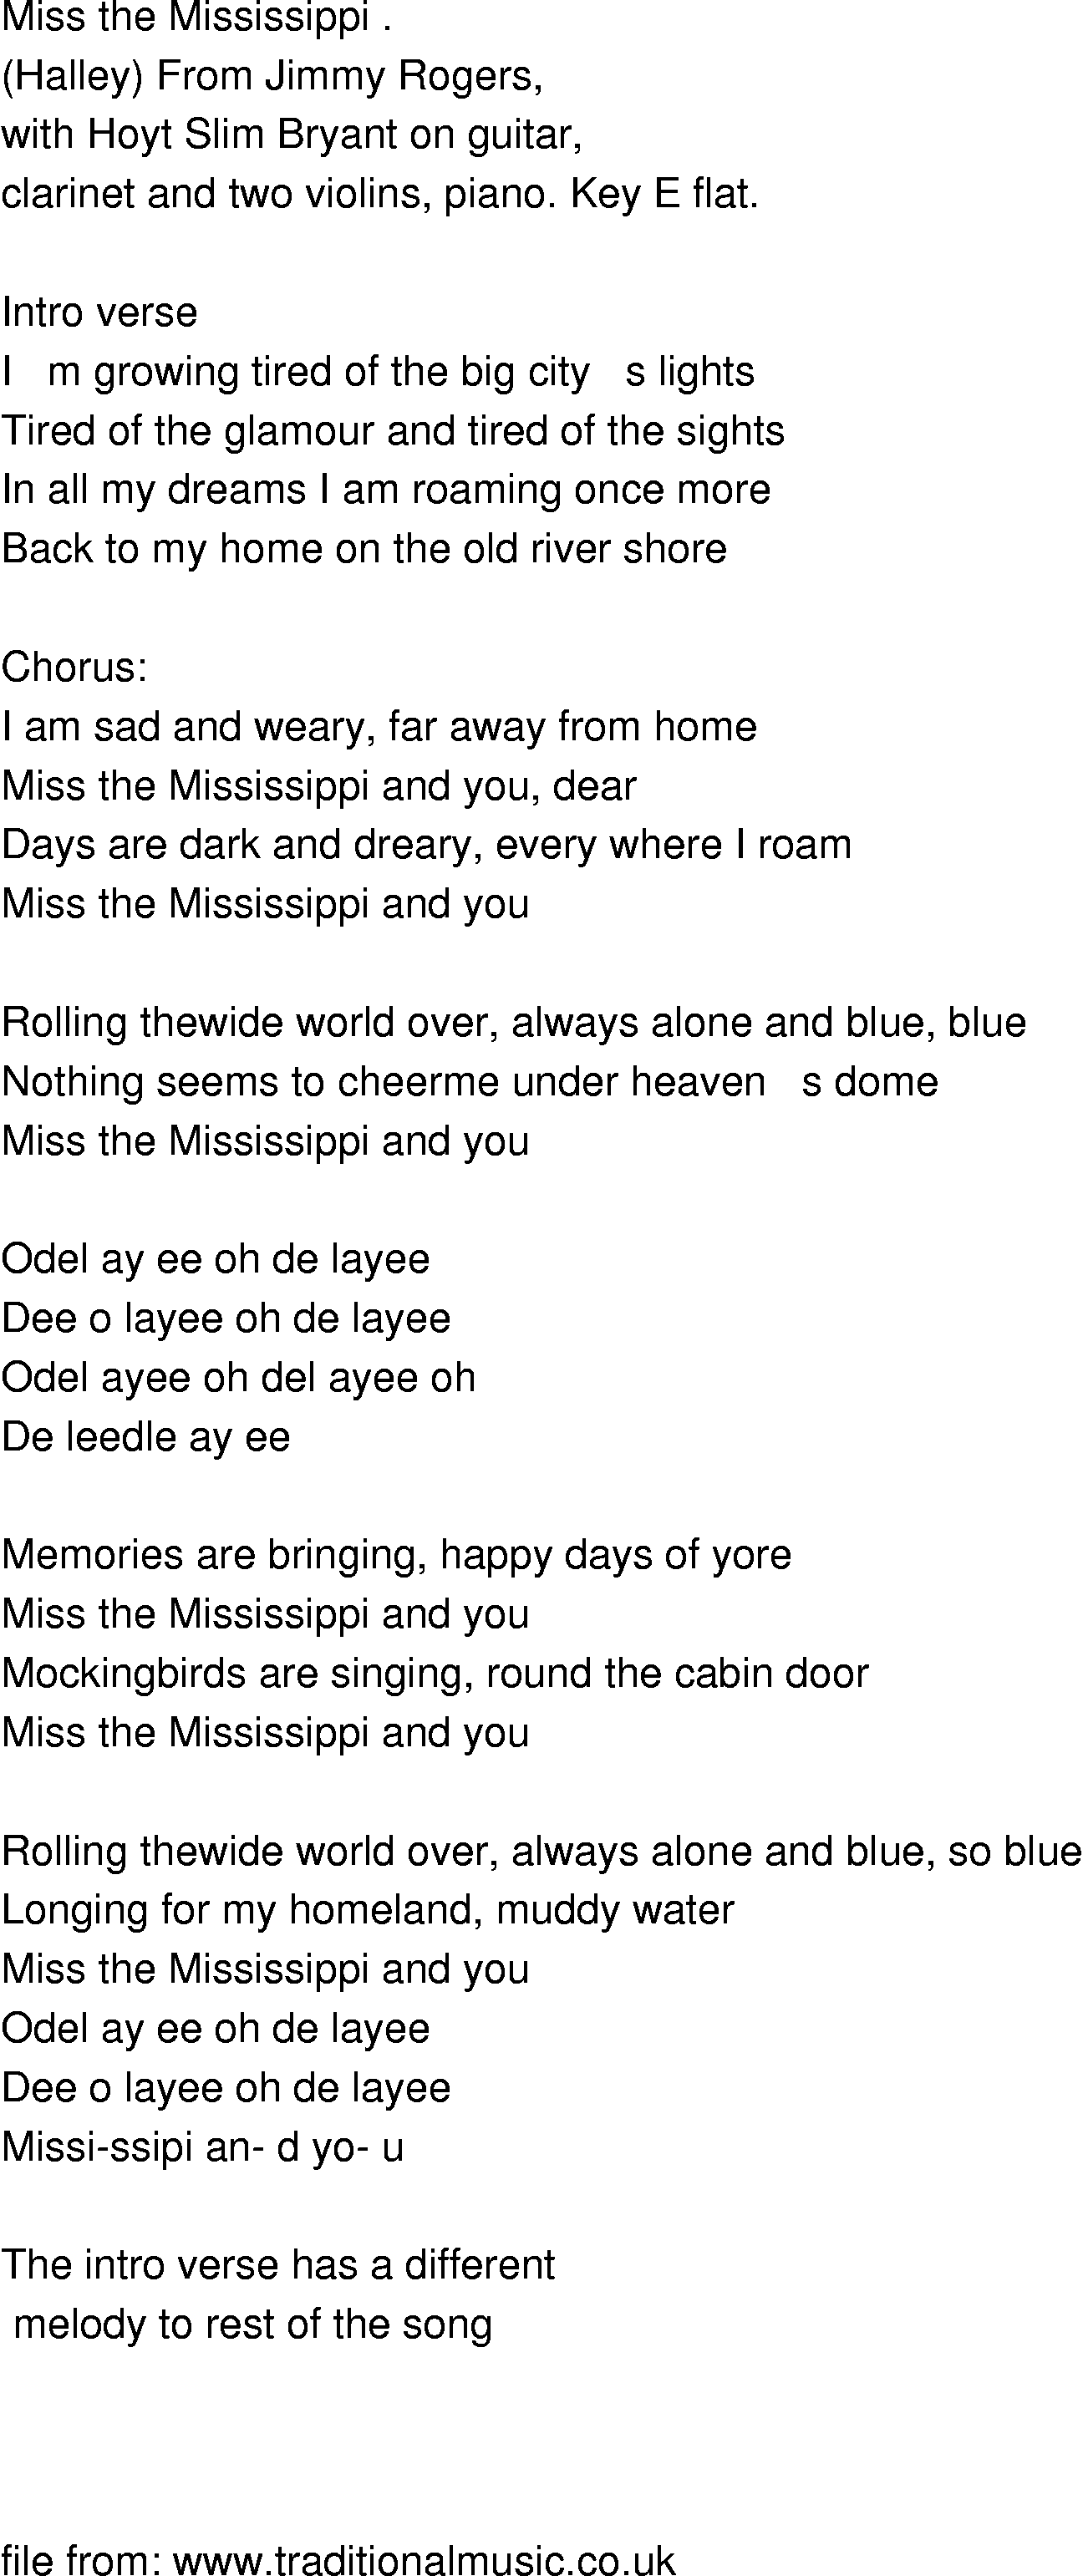 Old-Time (oldtimey) Song Lyrics - miss the mississippi